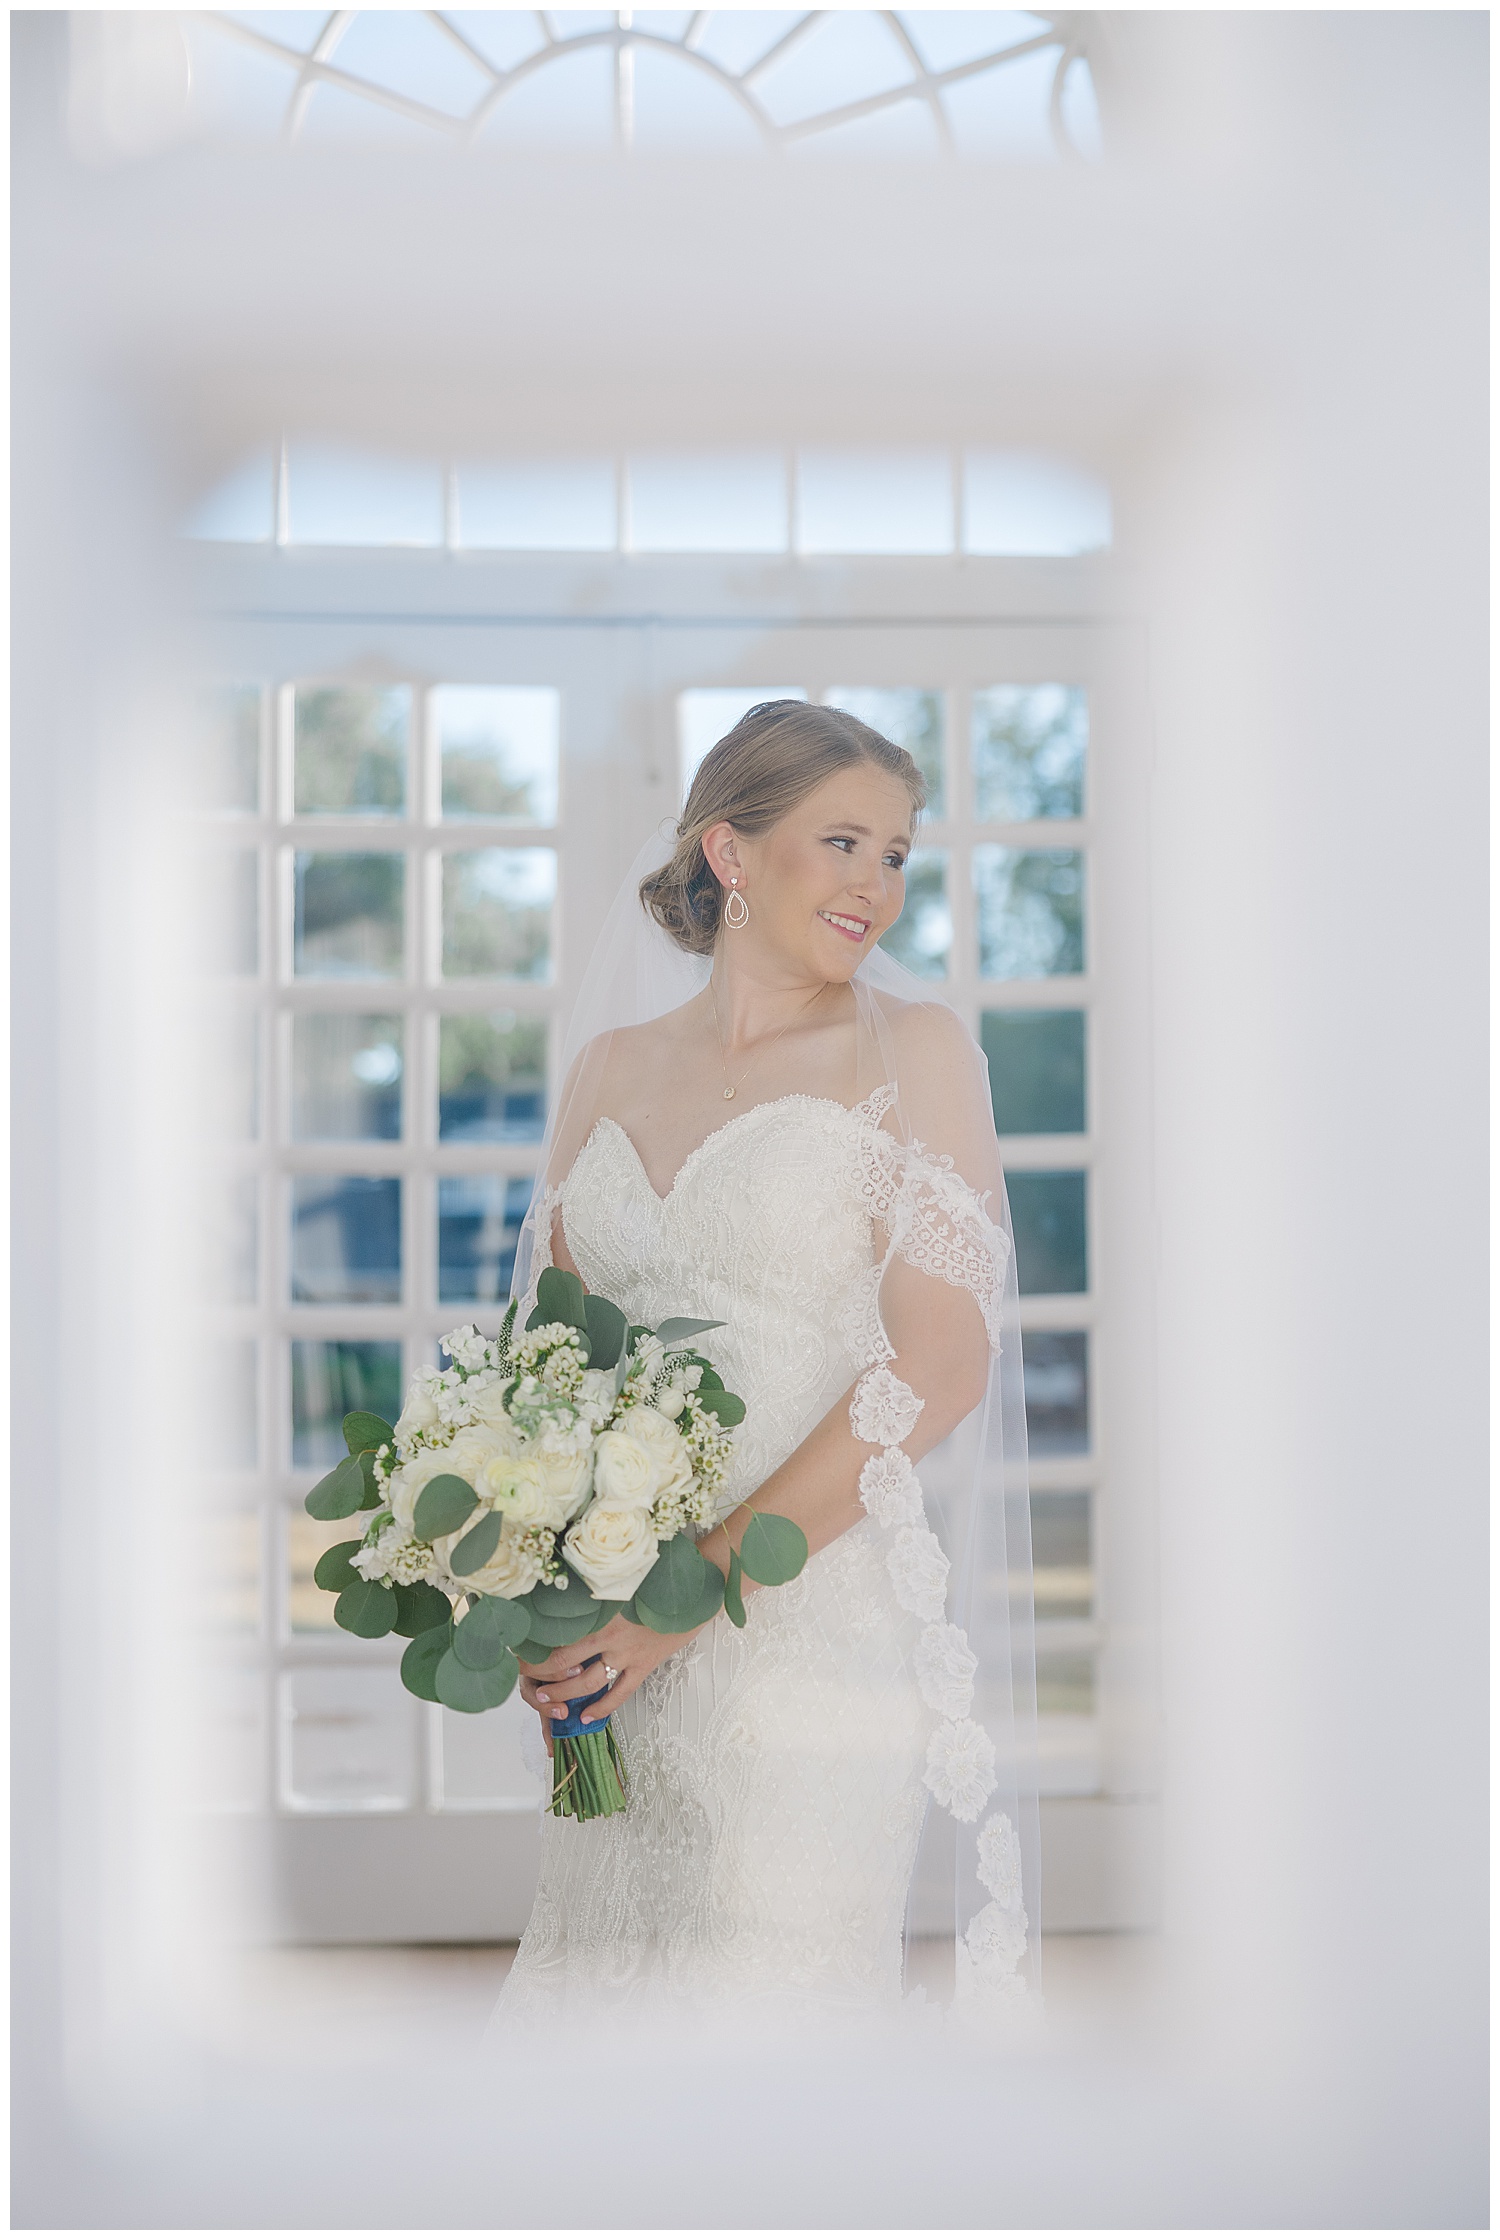 Juliann Riggs Photography captures a bride through the window.